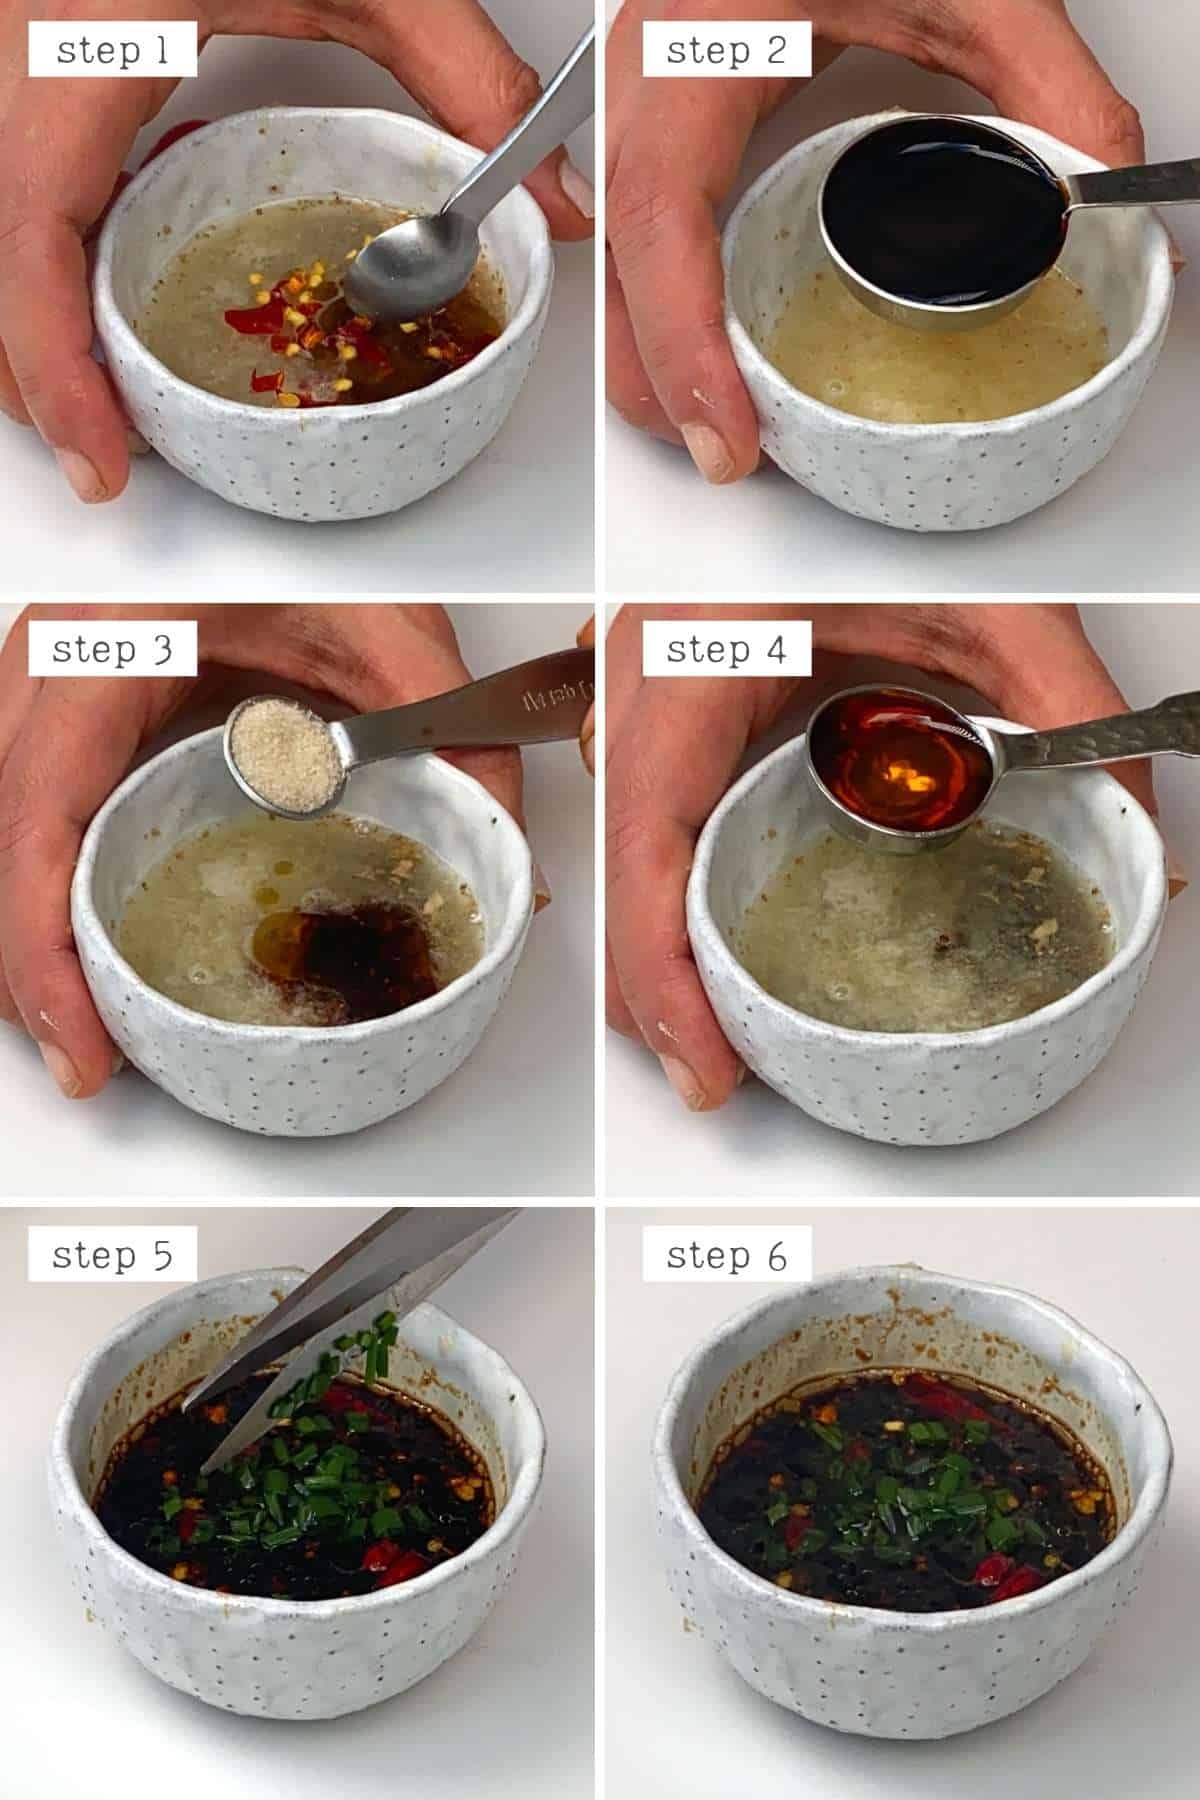 Steps for making dumpling dipping sauce